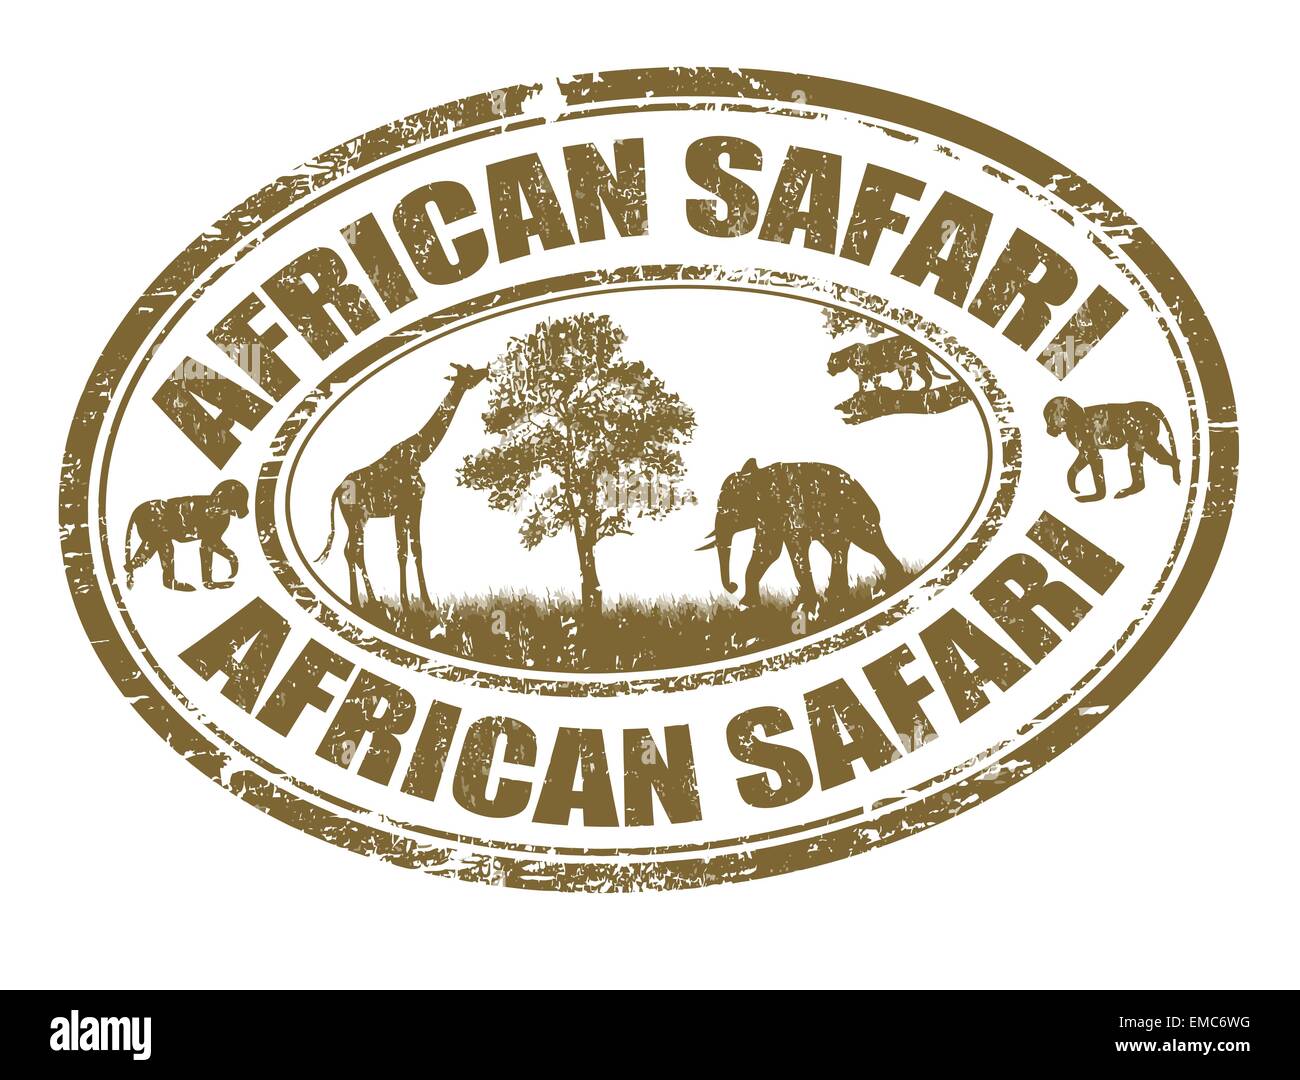 african safari logo